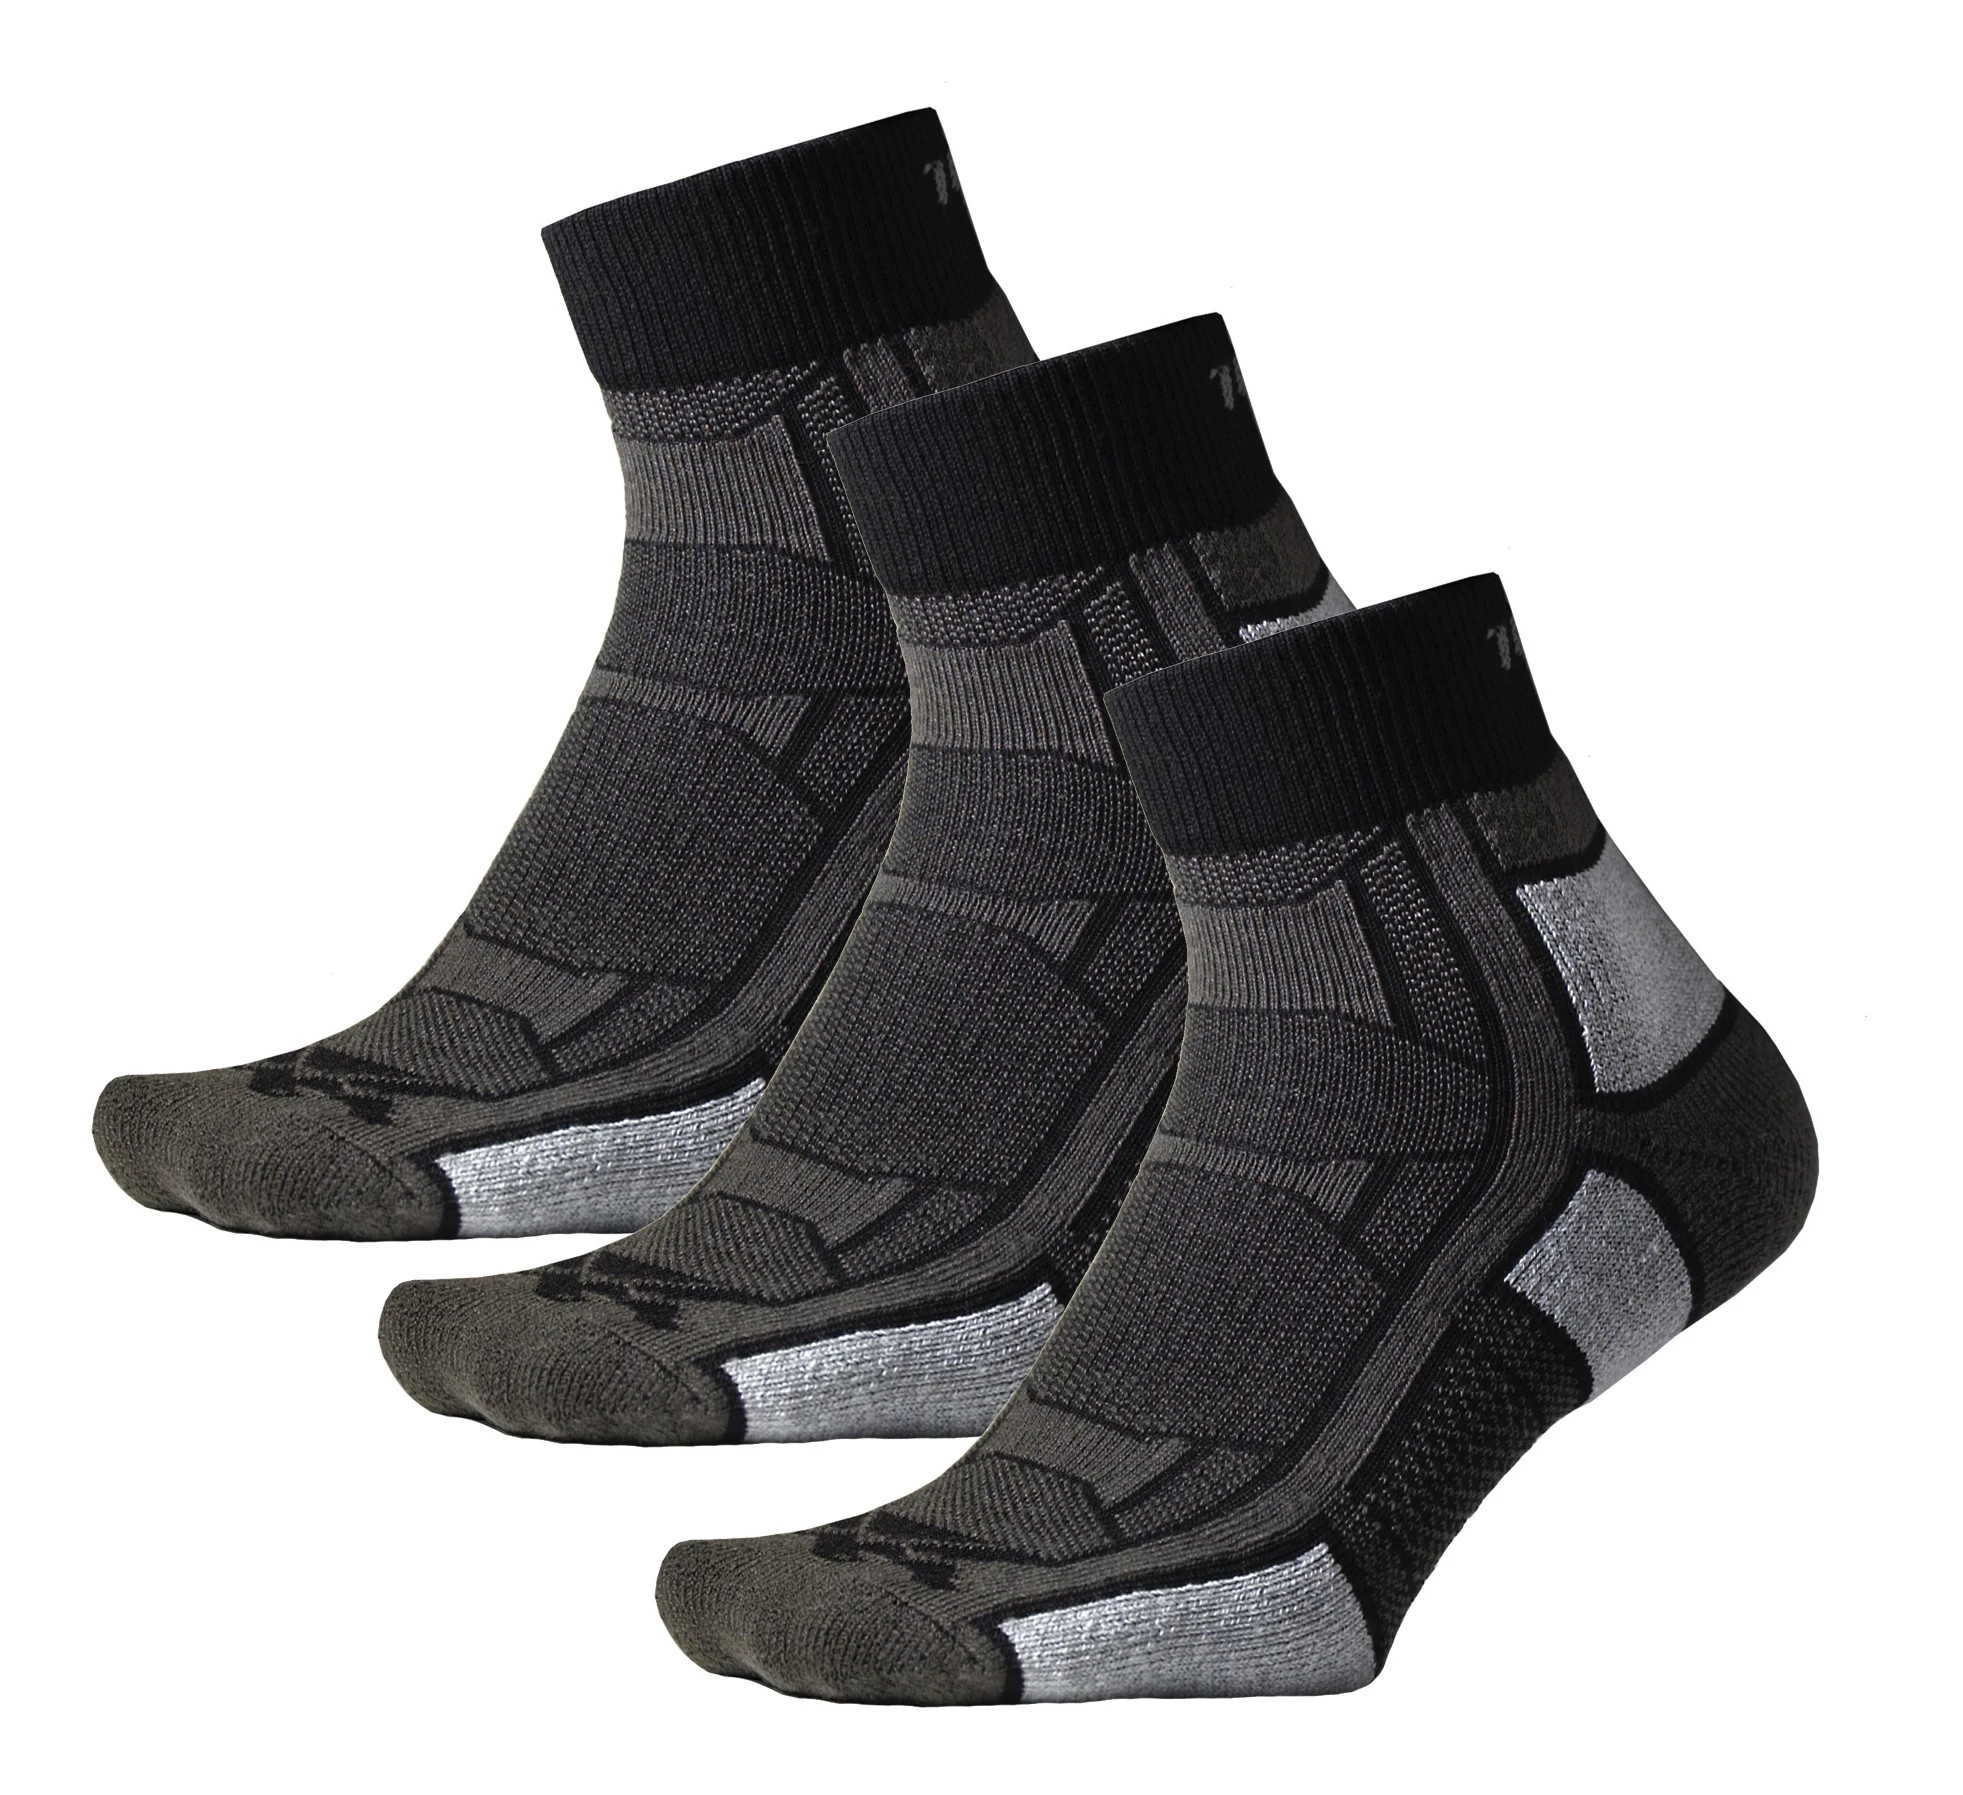 Thorlo Outdoor Athlete Low-Cut 3 Pack Socks